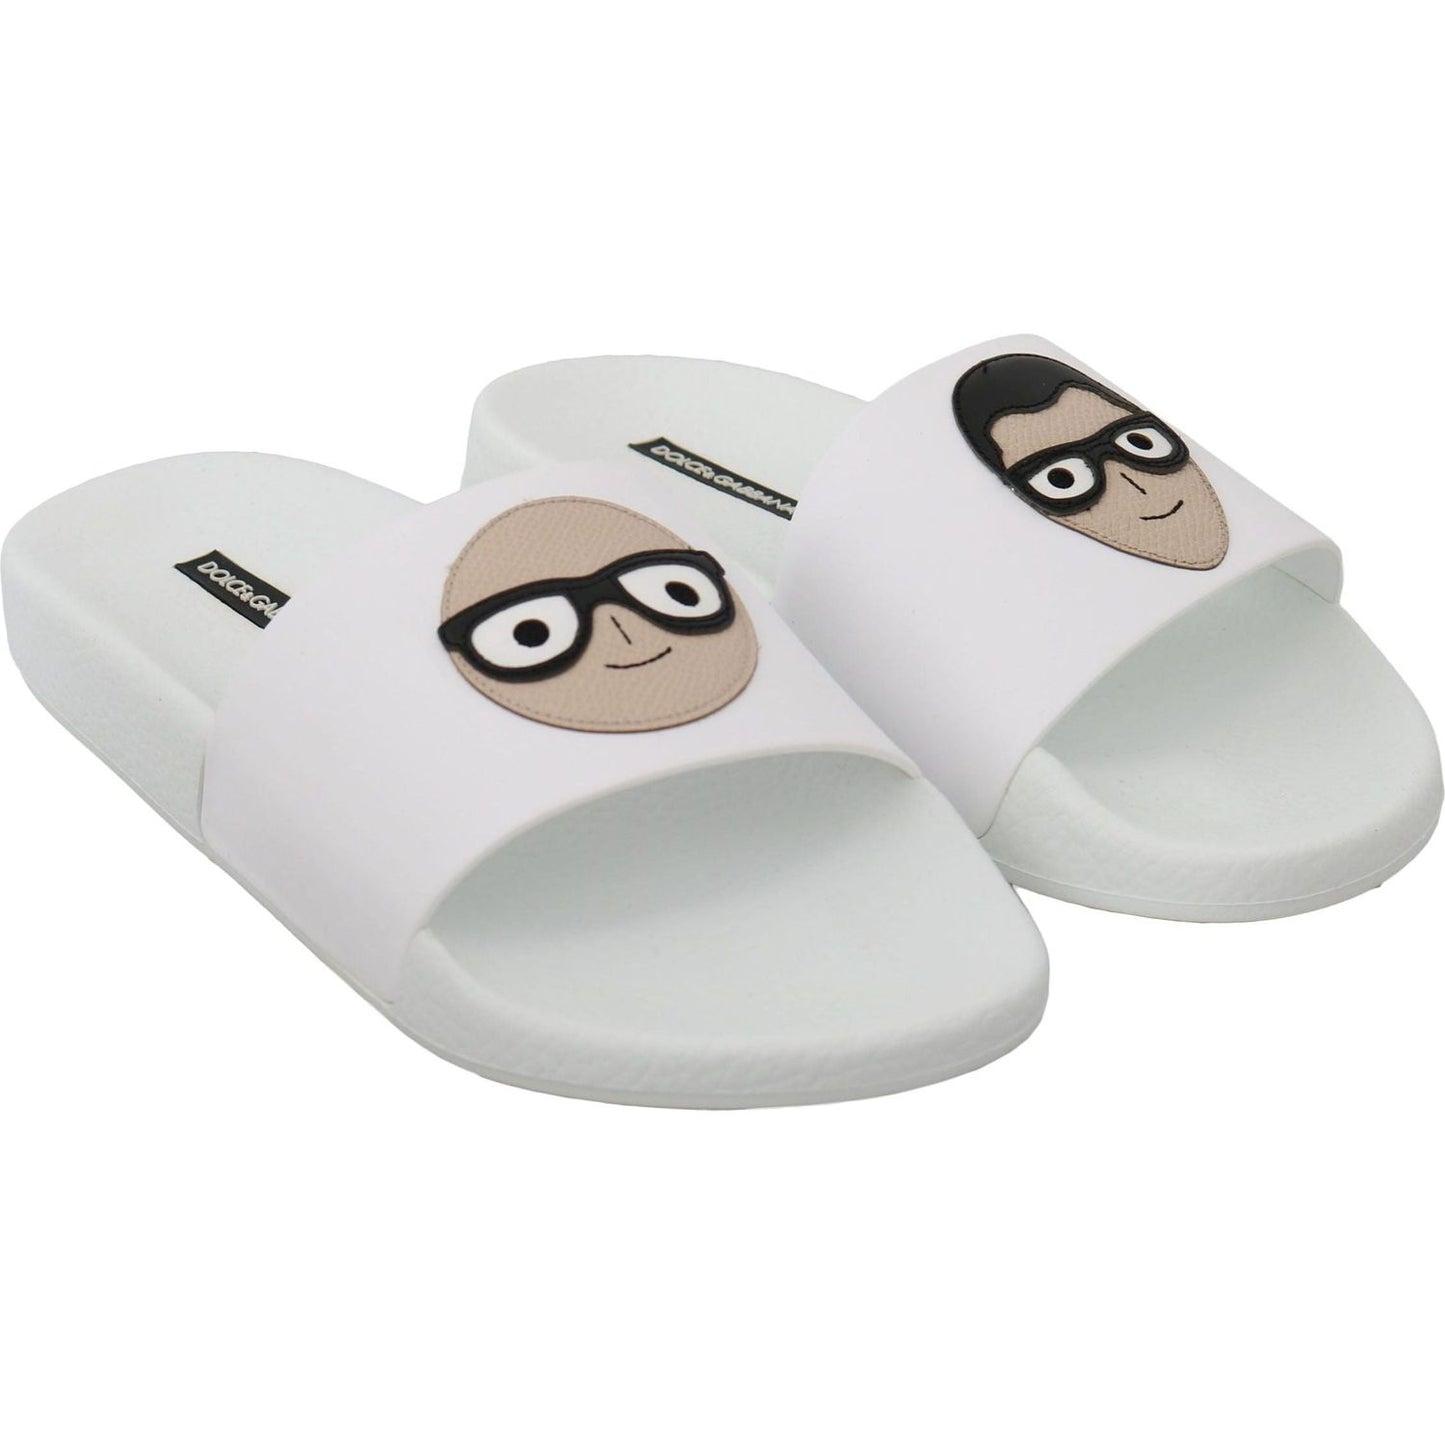 Dolce & Gabbana Chic White Slide Sandals - Luxury Summer Footwear white-leather-dgfamily-slides-shoes-sandals